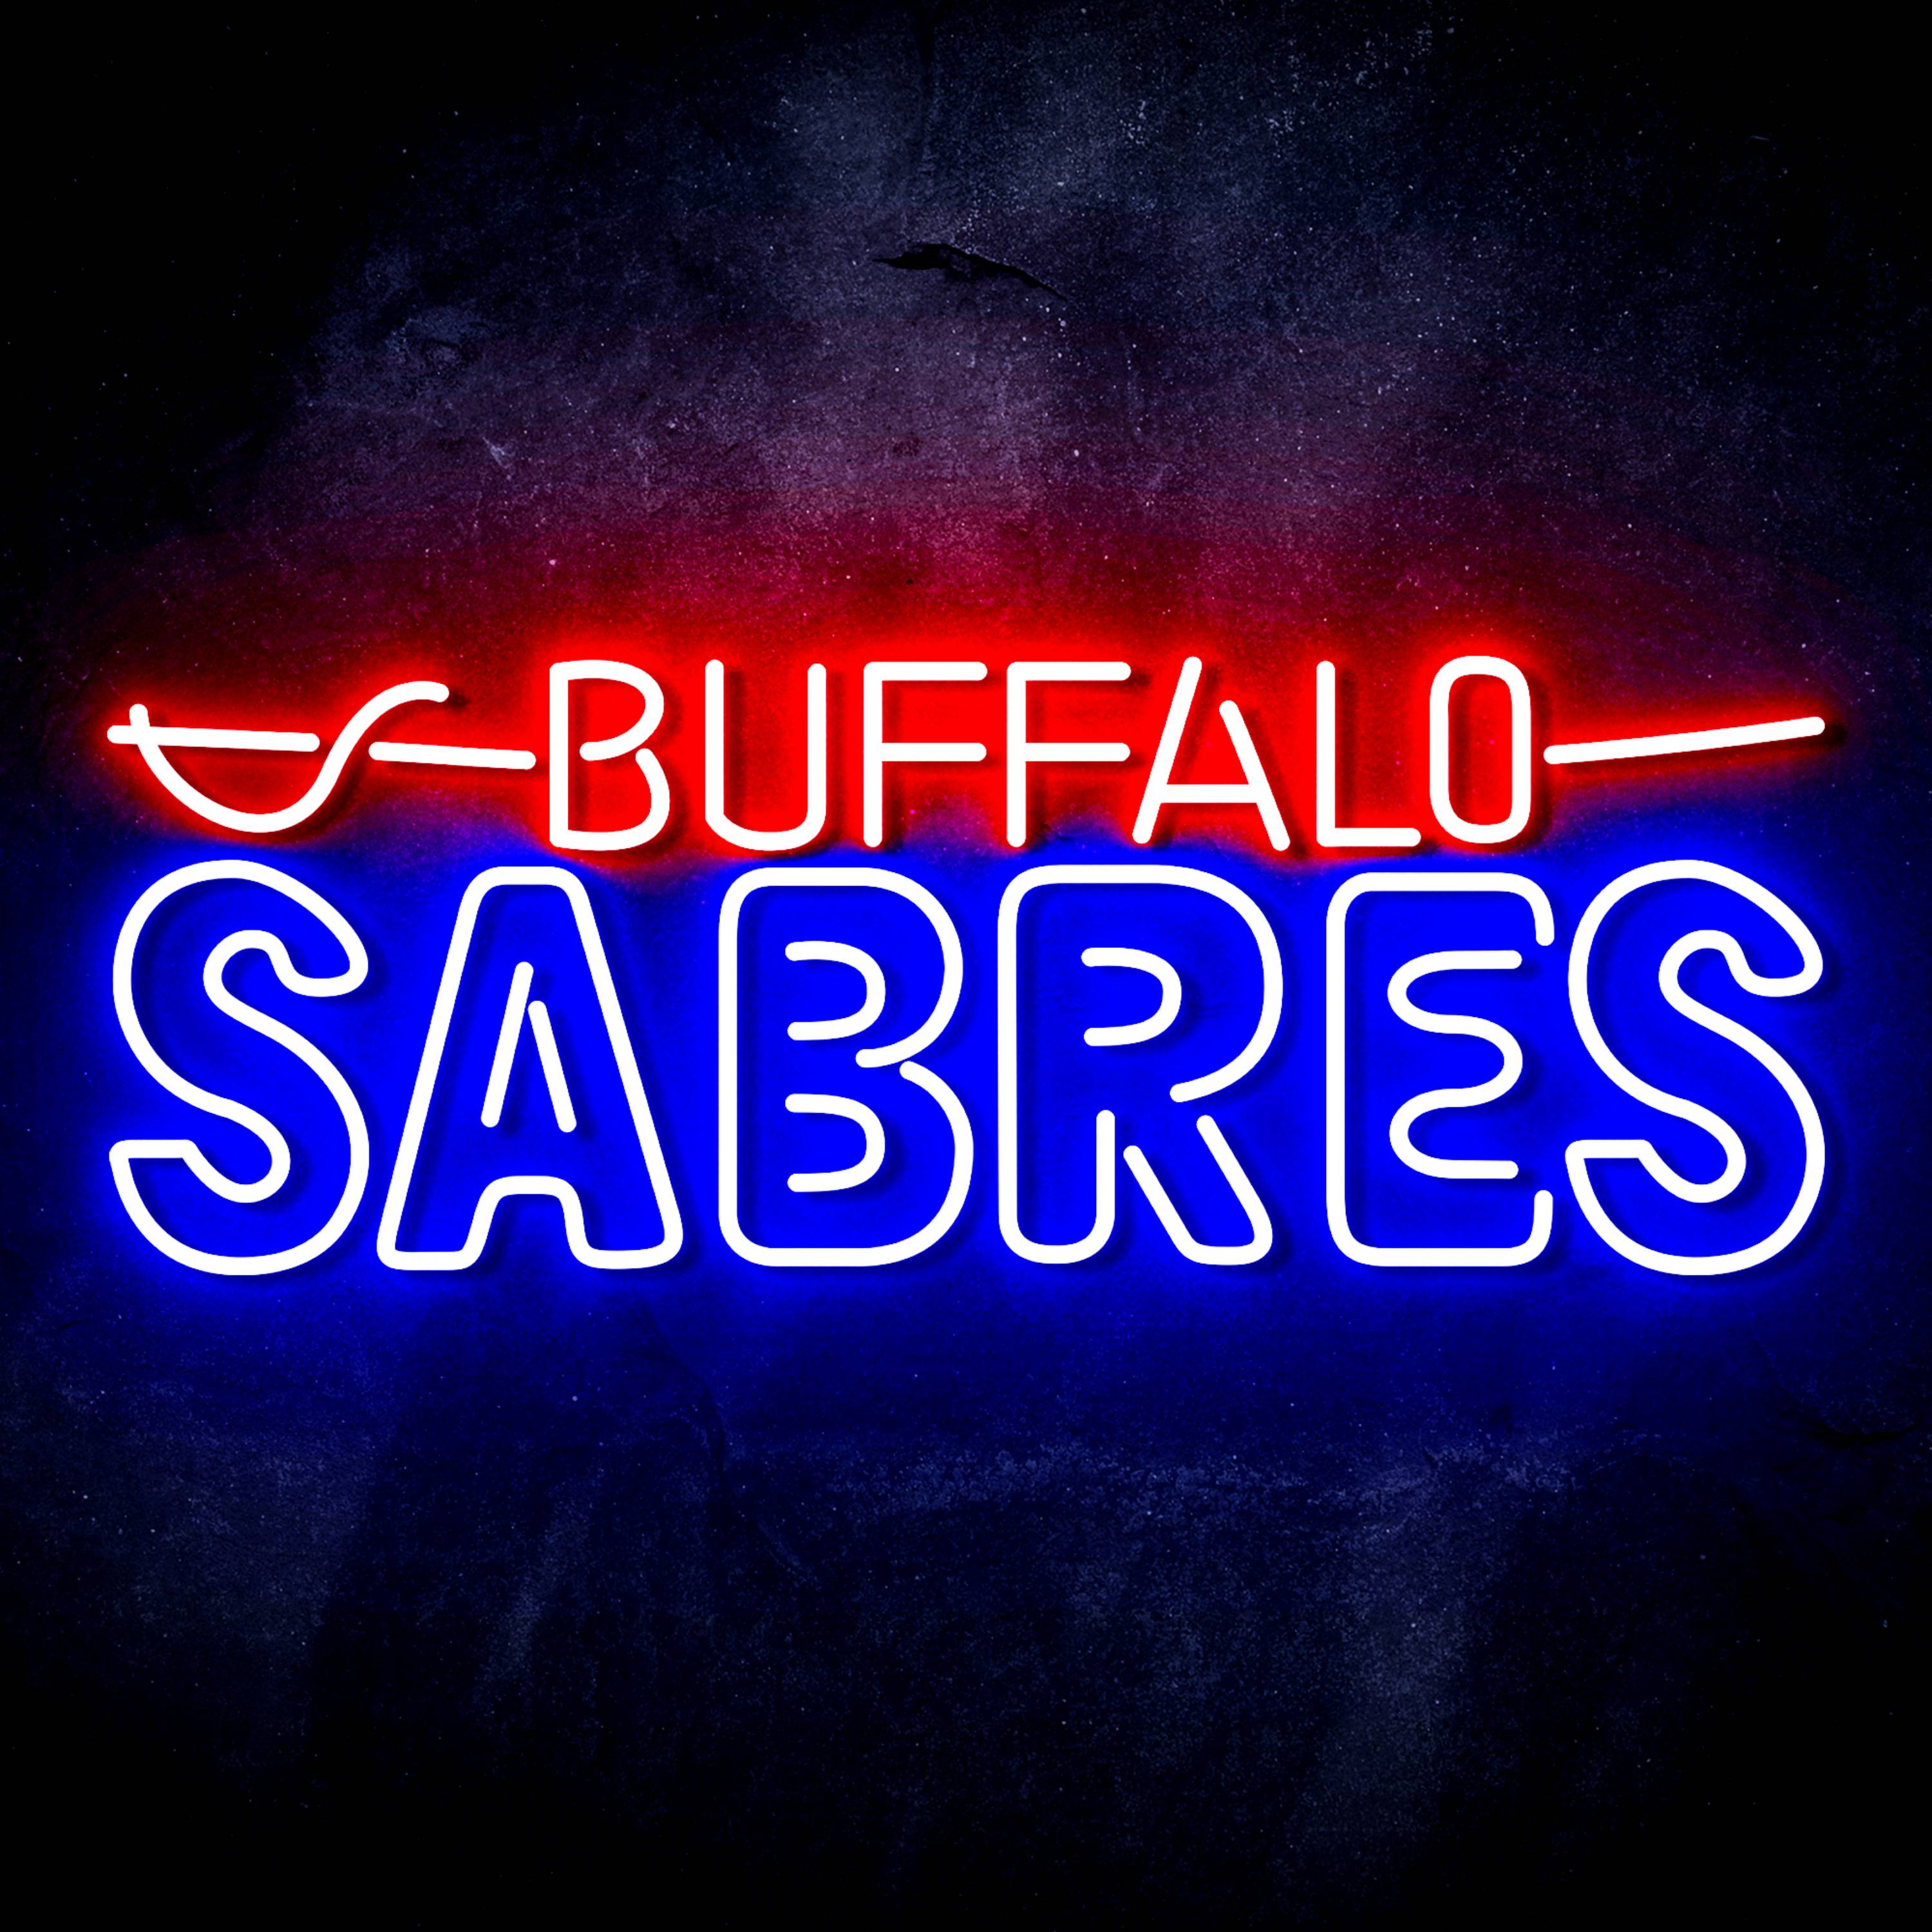 NHL Buffalo Sabres LED Neon Sign